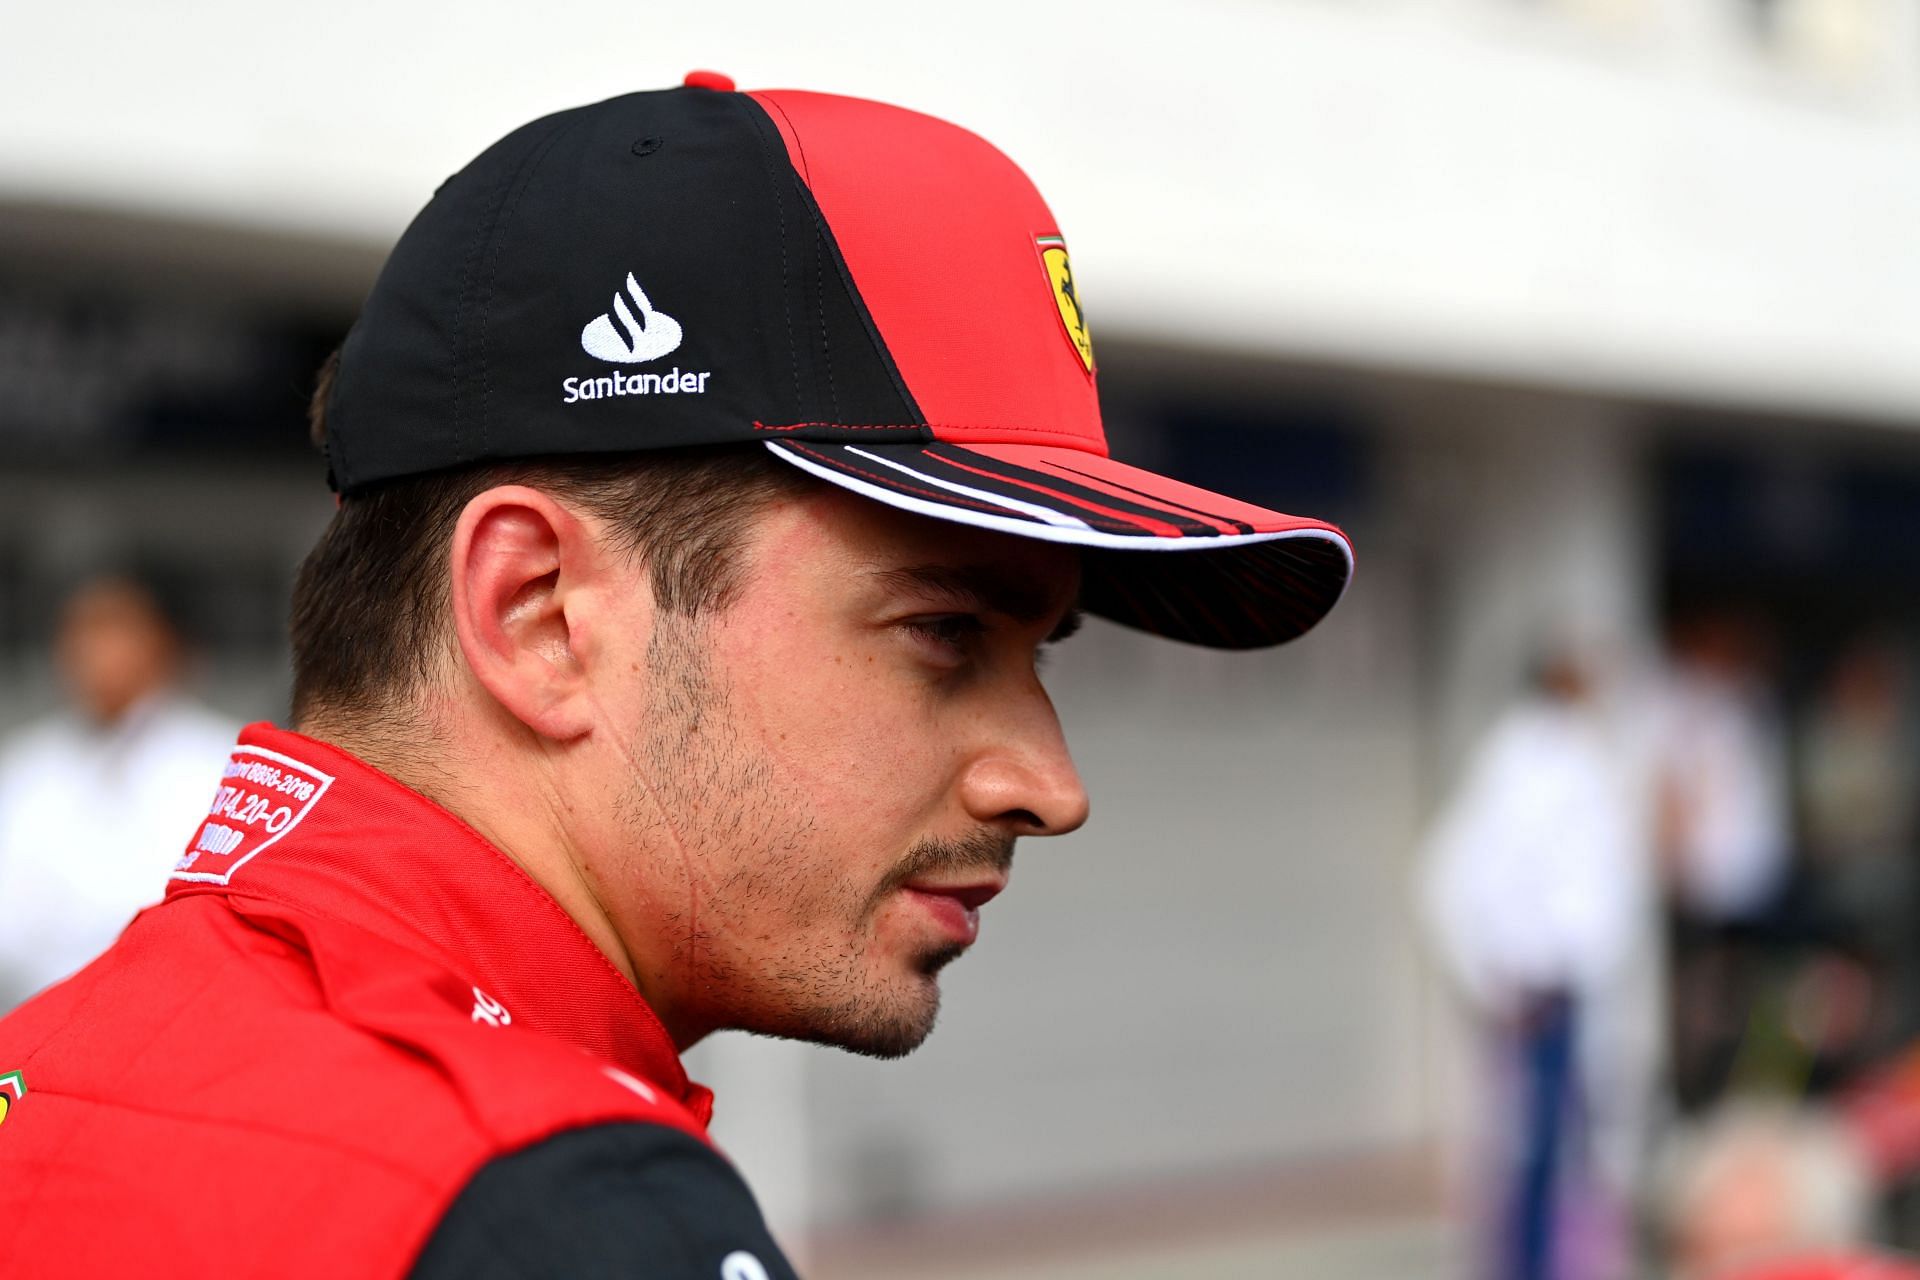 F1 Grand Prix of Hungary - Qualifying - Charles Leclerc at Hungaroring